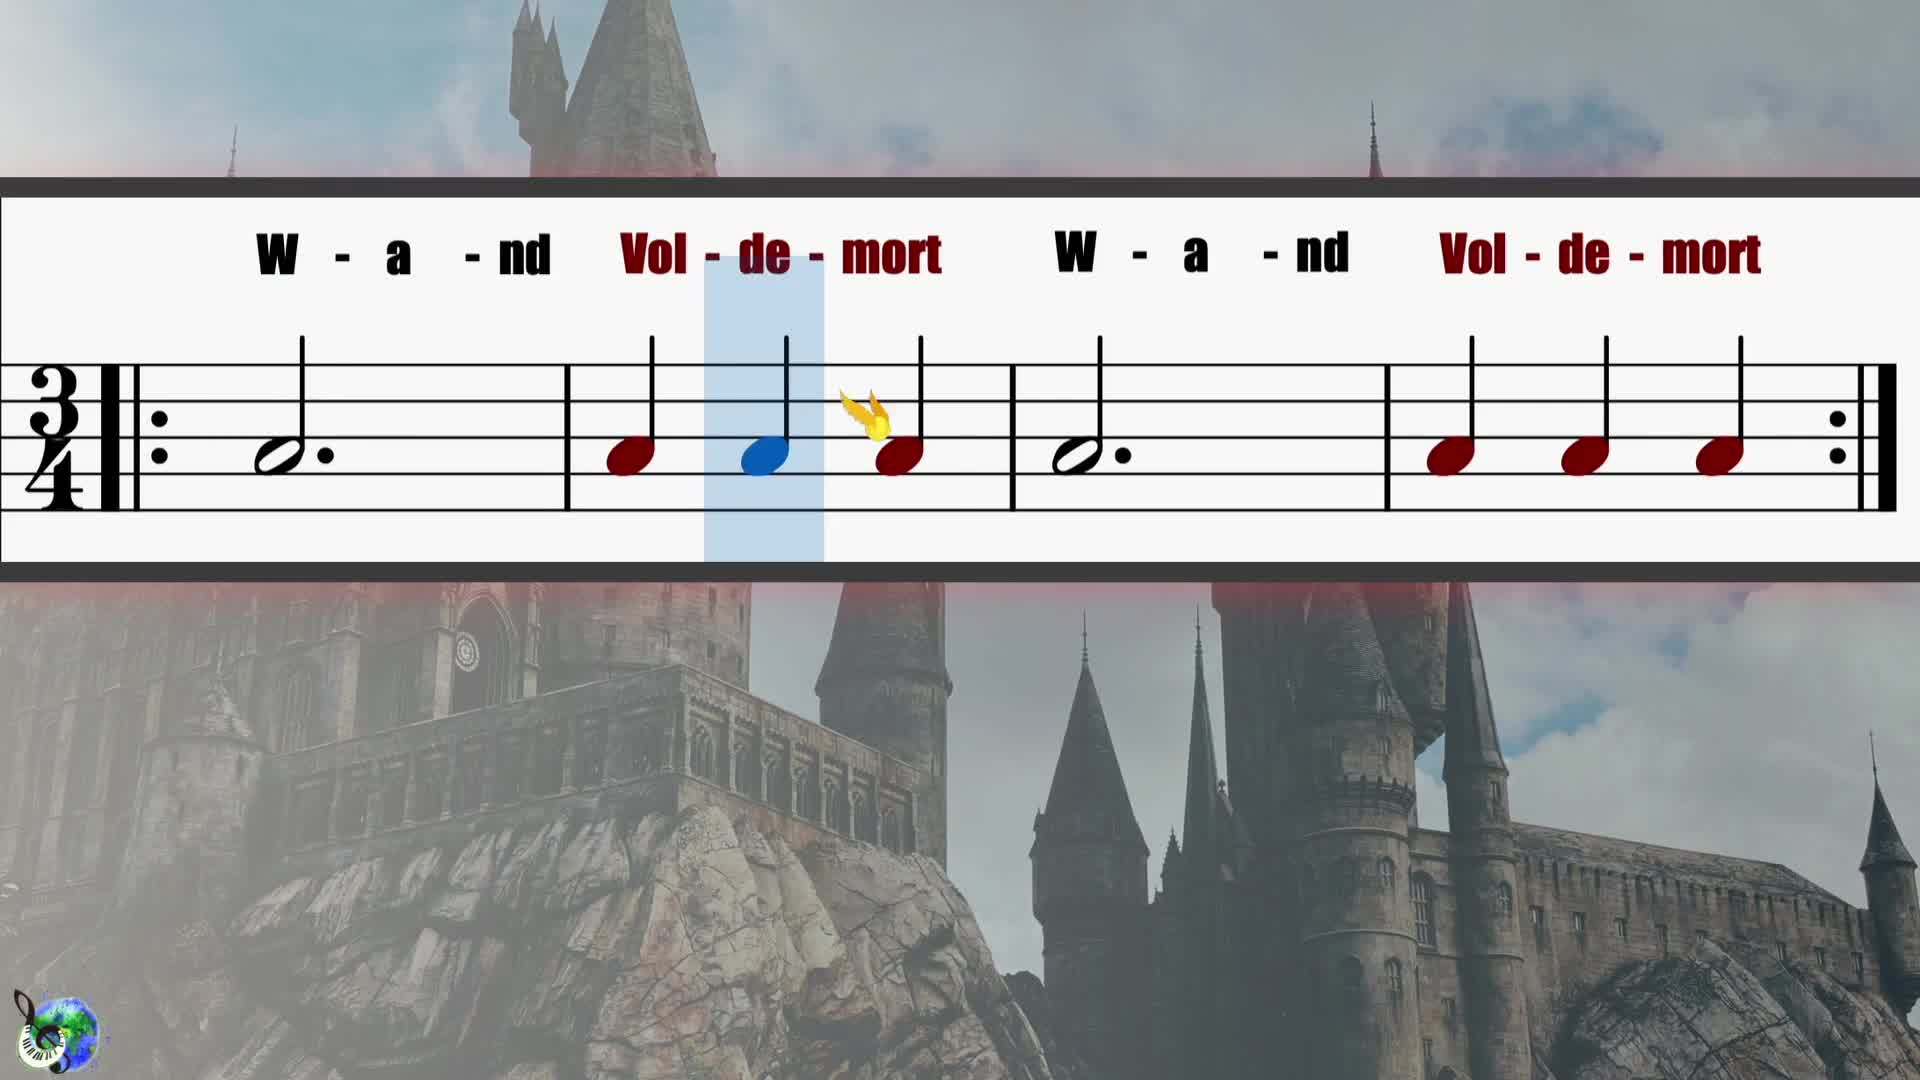 Elementary Music Game: Rhythm Play-Along [Harry Potter Theme]